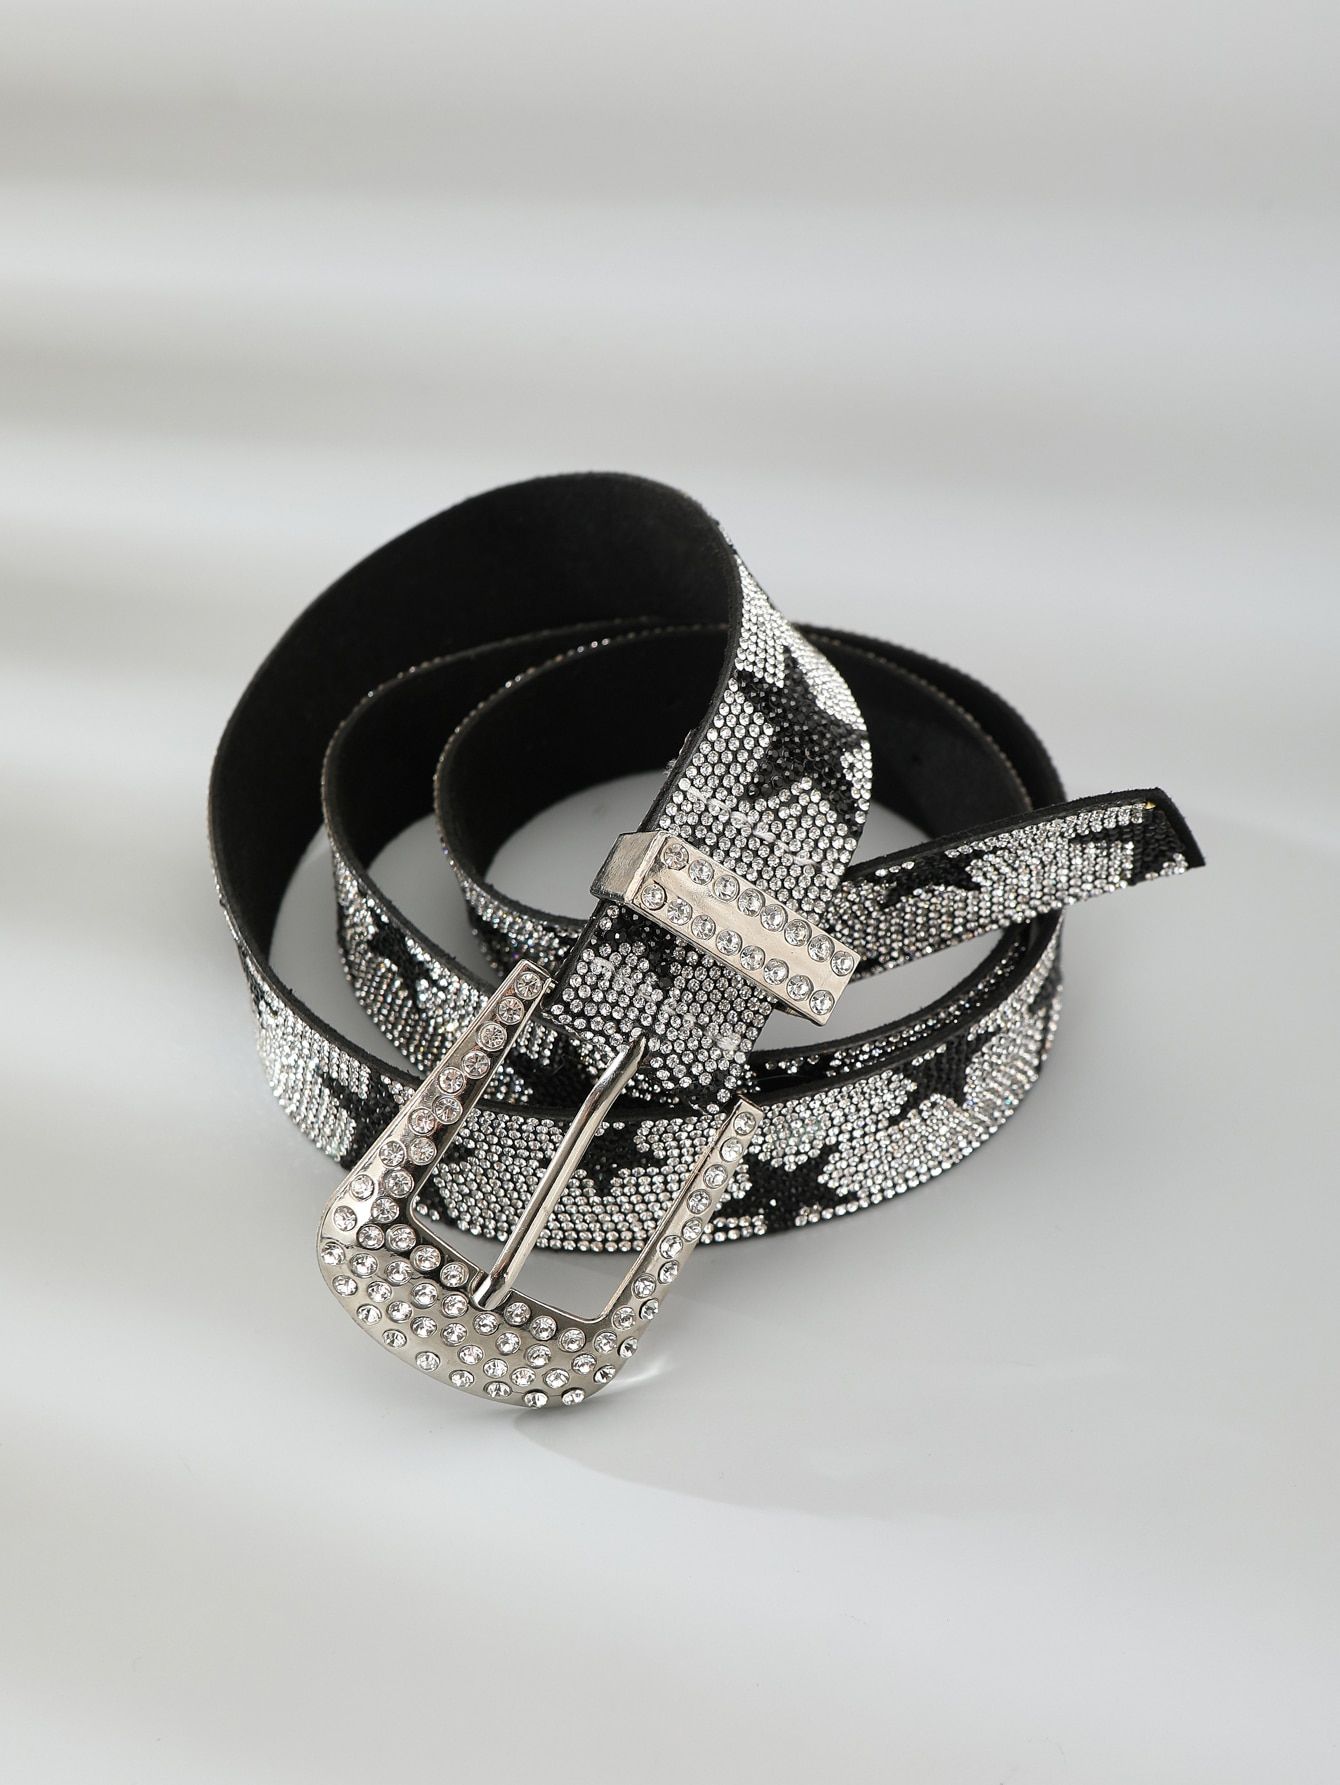 Belts For Women: Stylish Accessories to Define Your Waistline